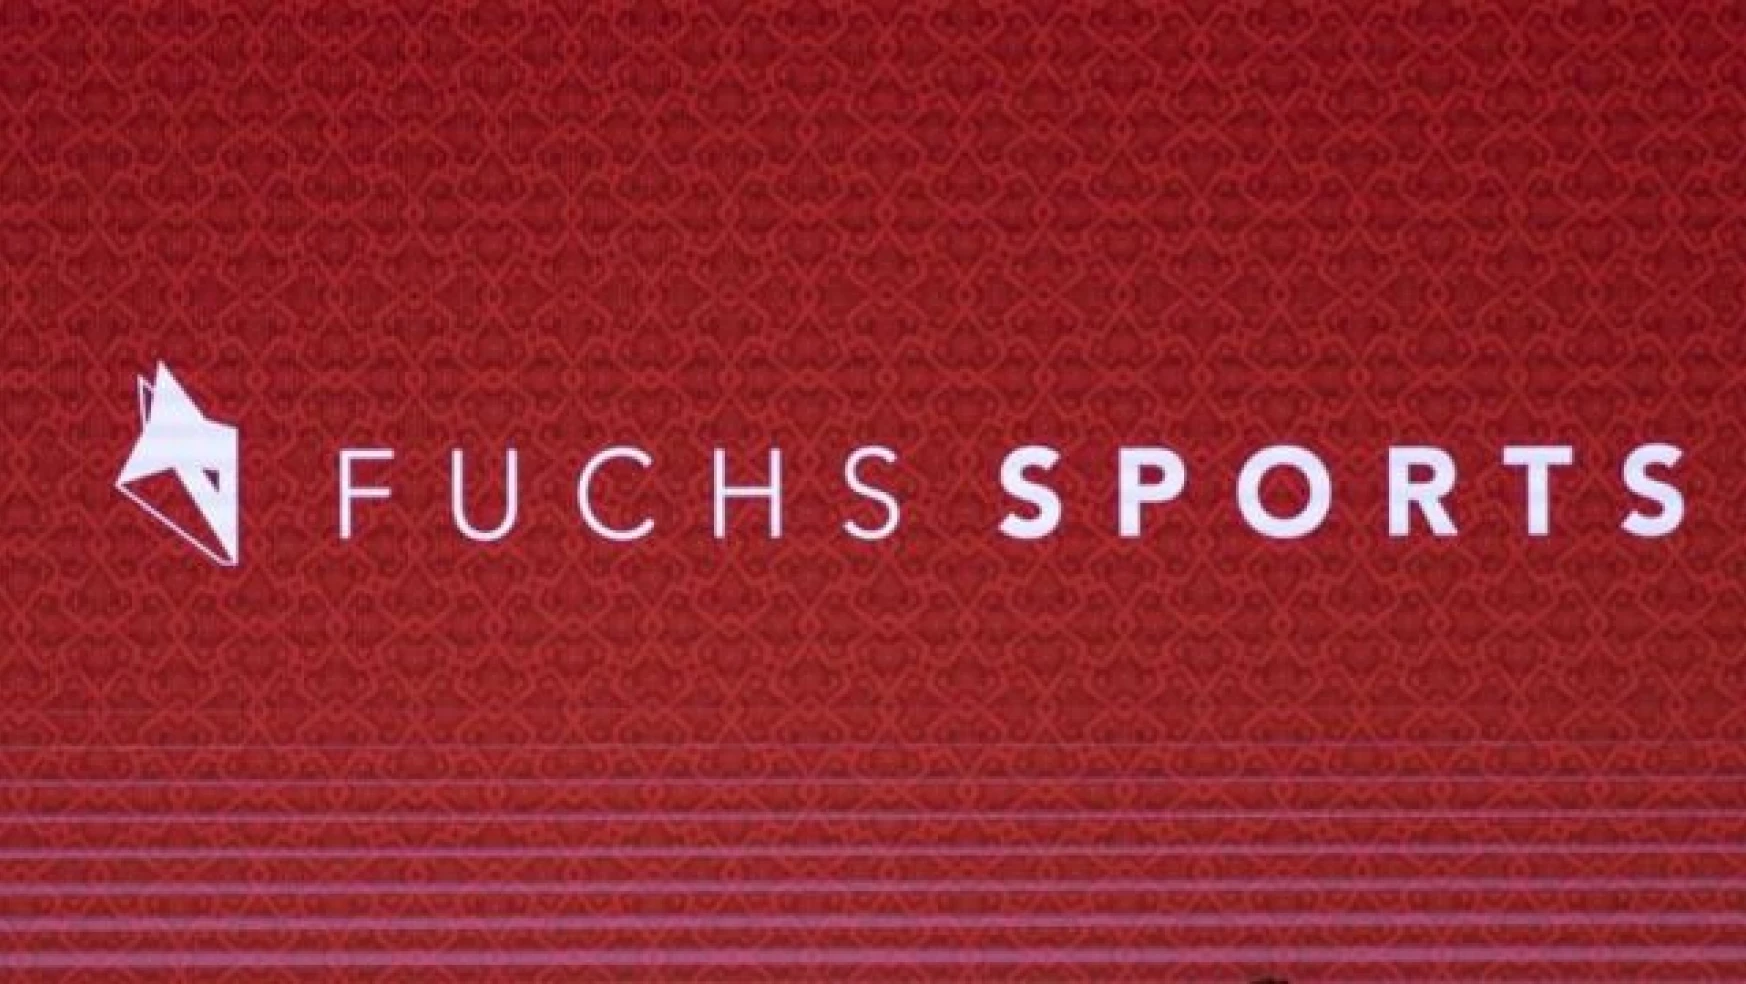 Fuchs Sports yayın akışı... Canlı yayınlar